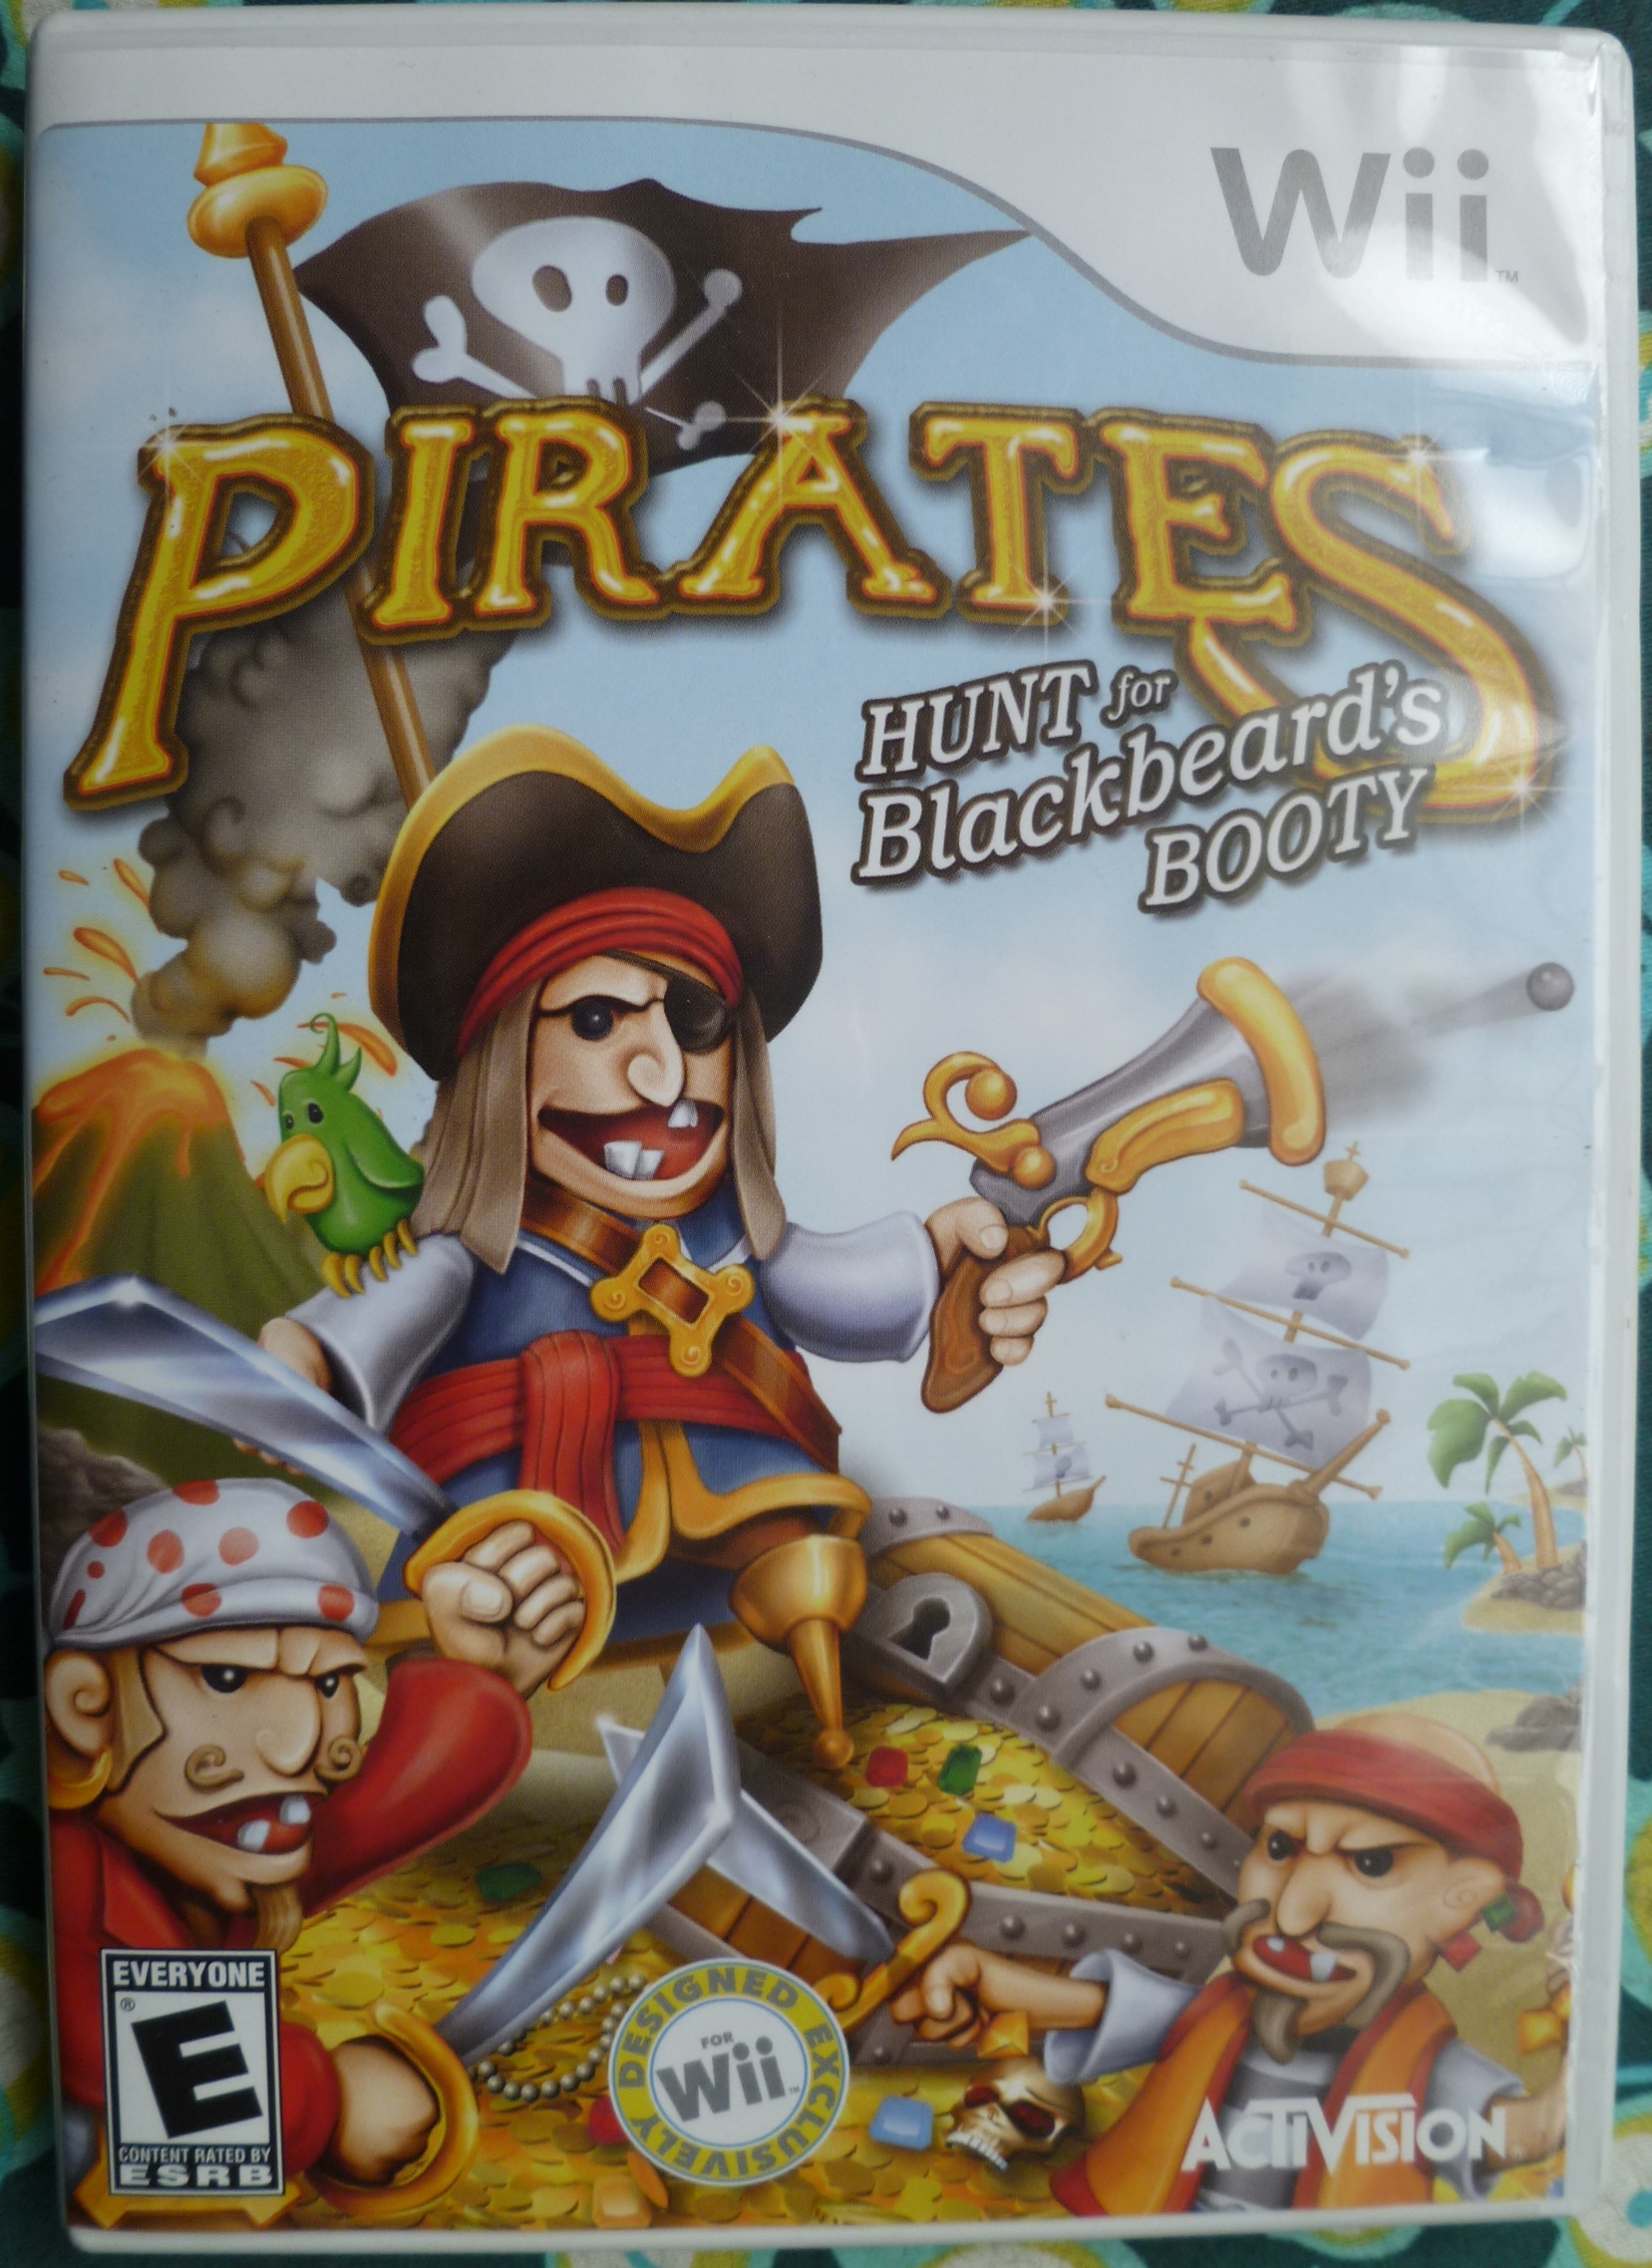 Pirates Hunt for Blackbeards Booty Cover